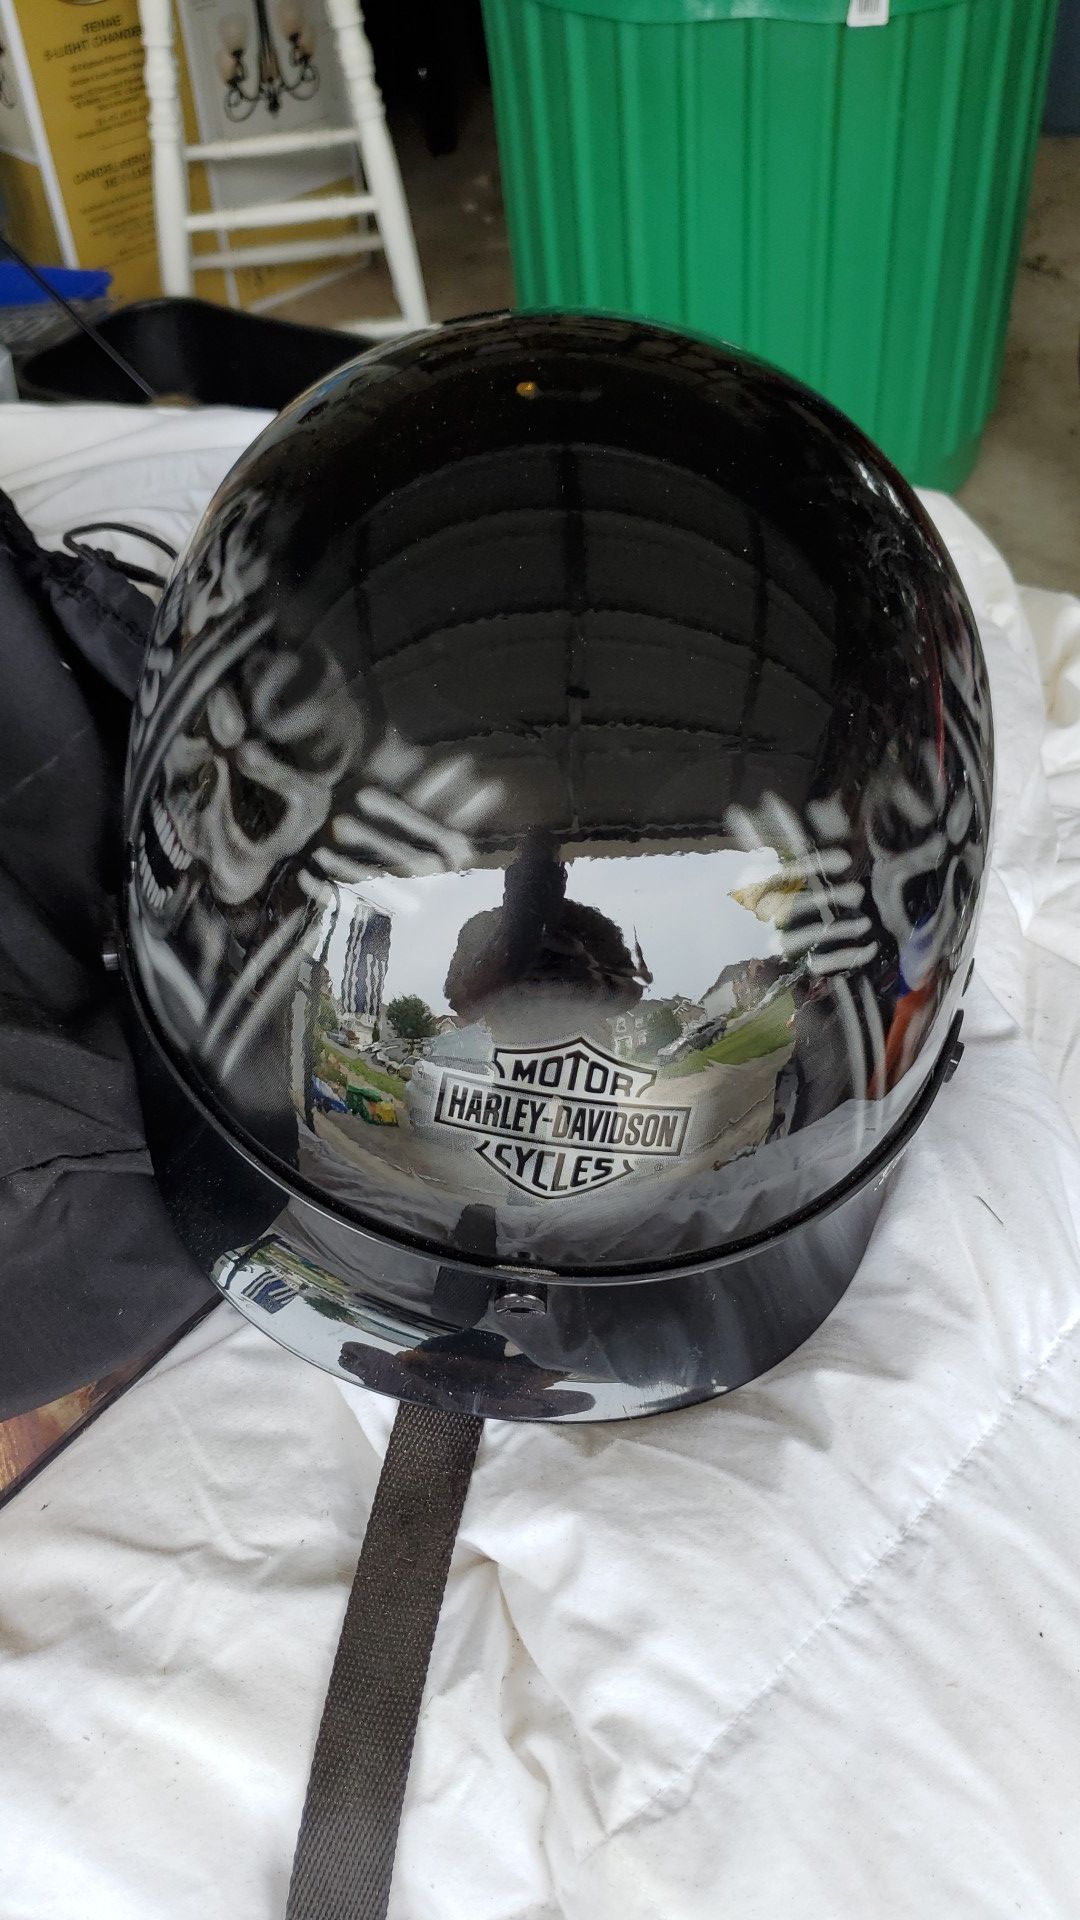 Harleys Davidson's xl helmet